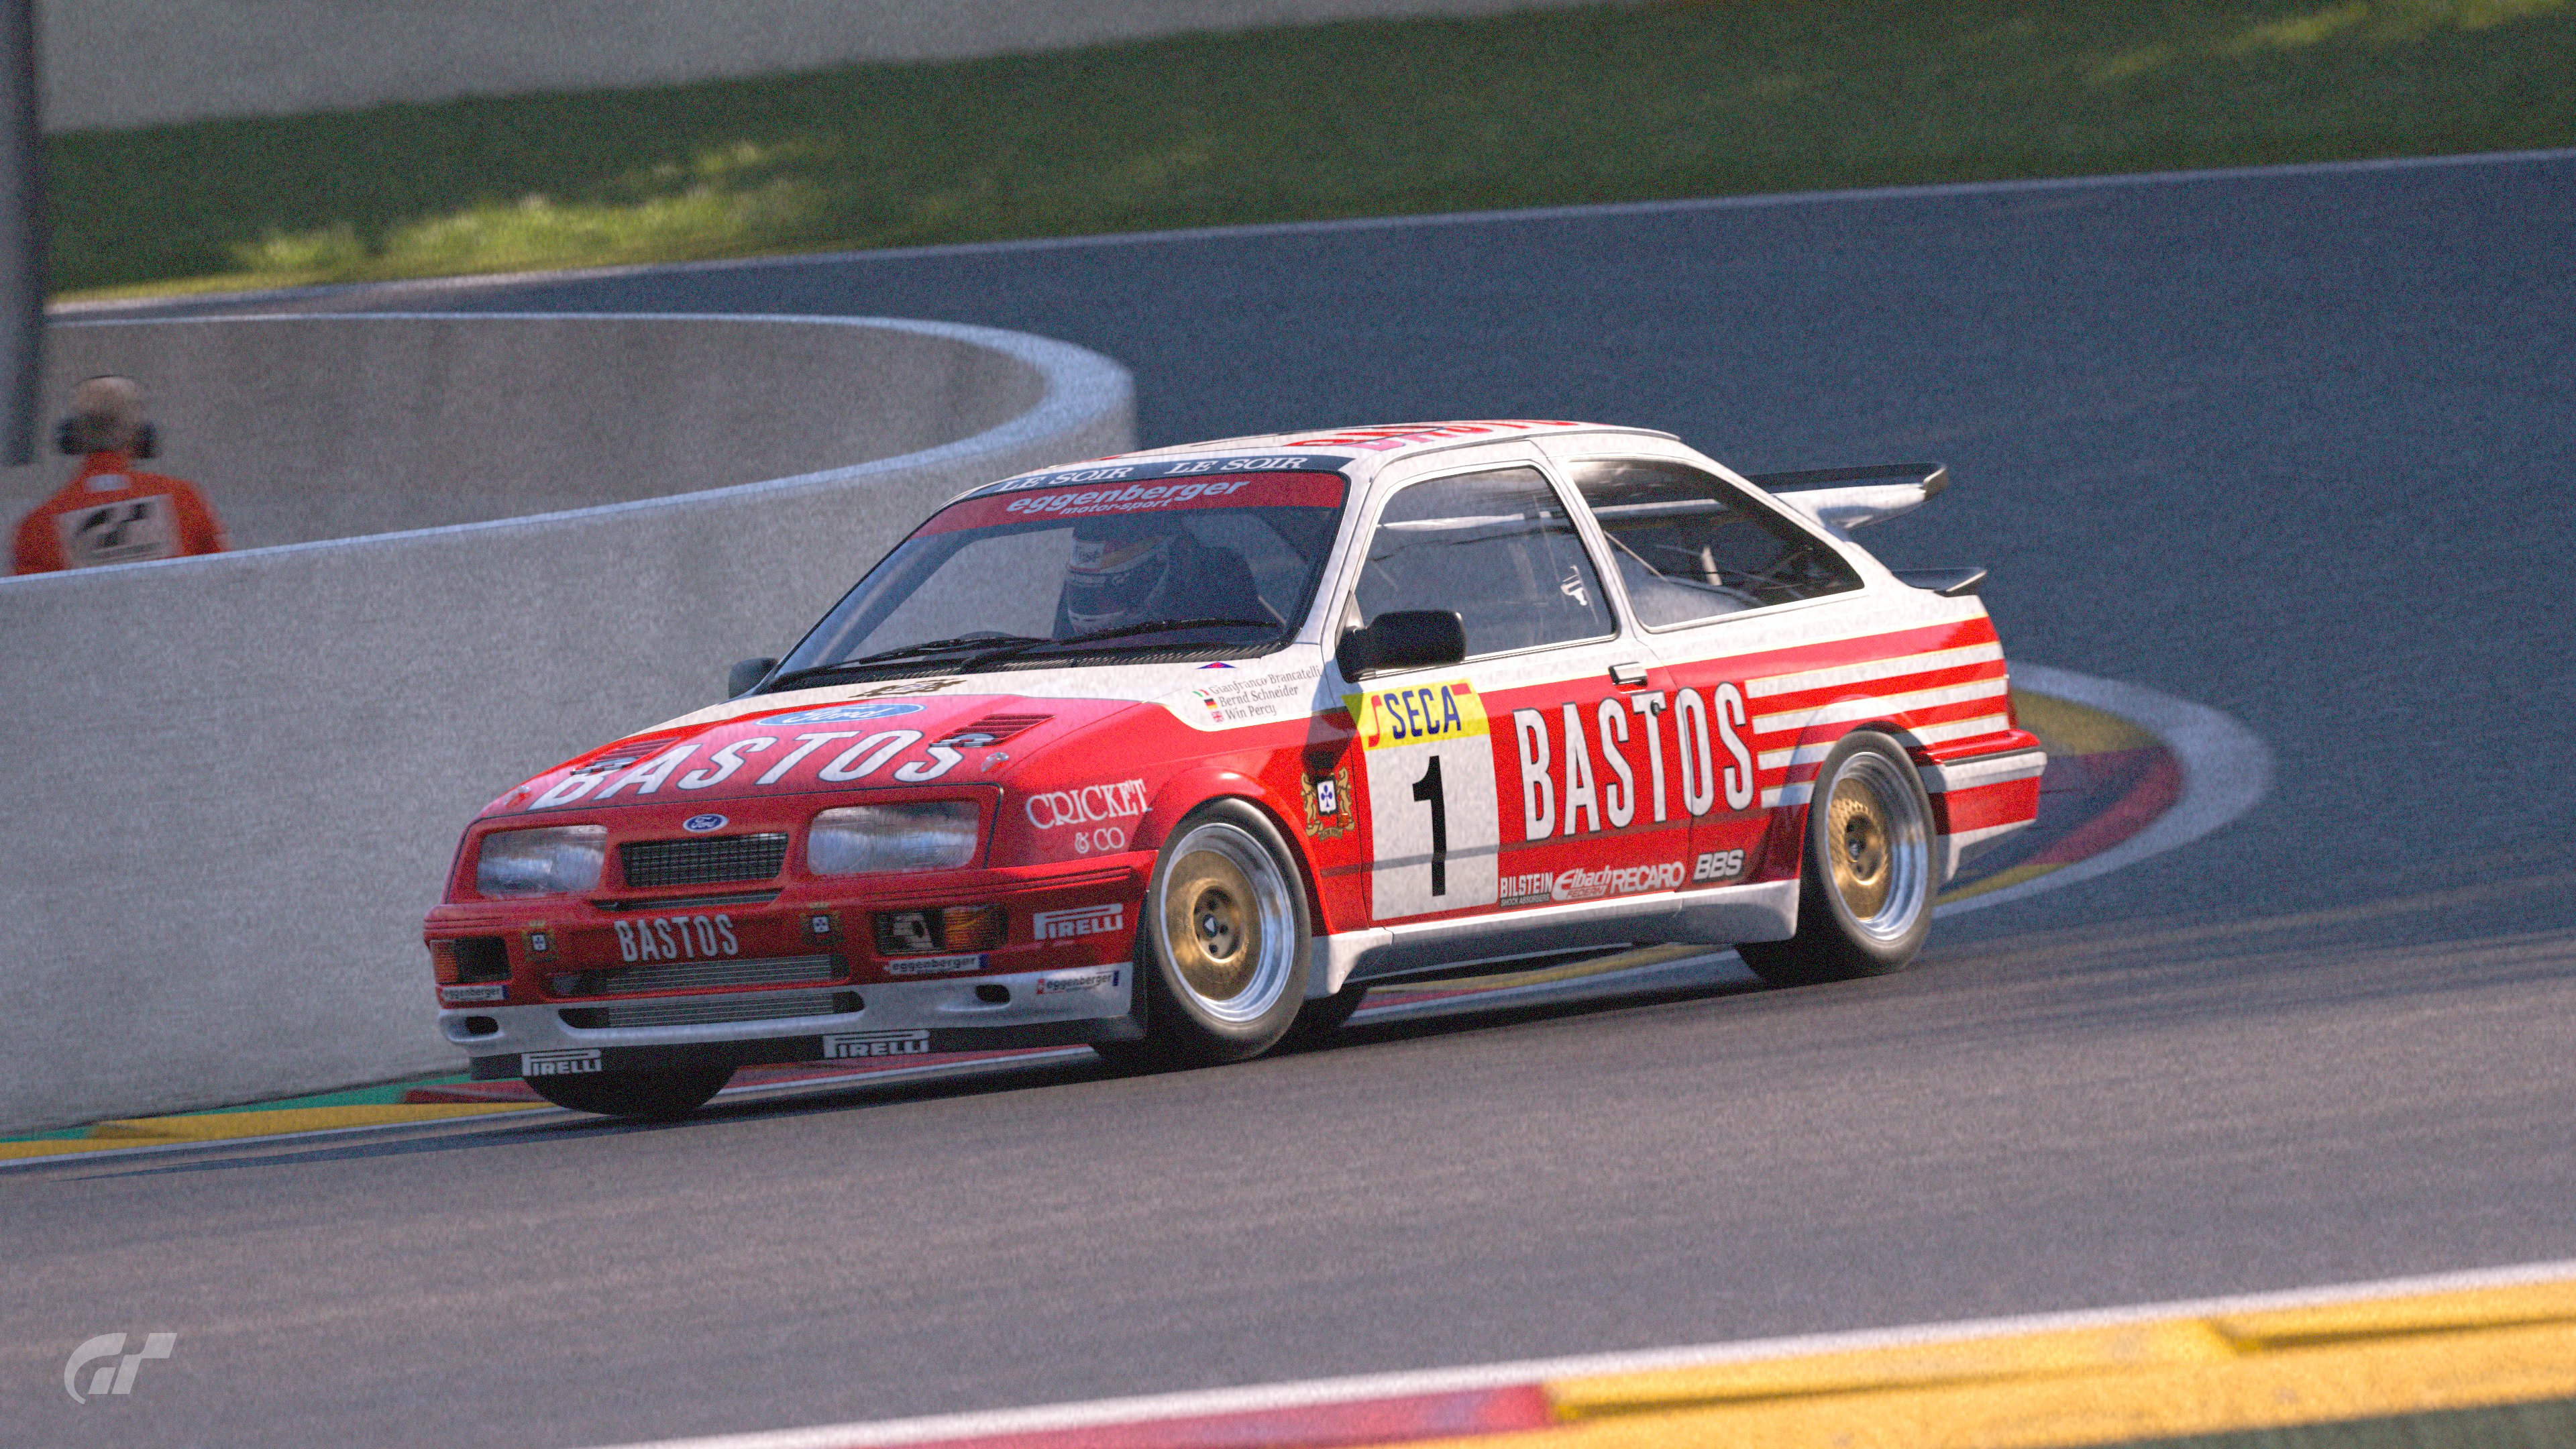 Eggenberger Bastos Racing Team #1 ‘89